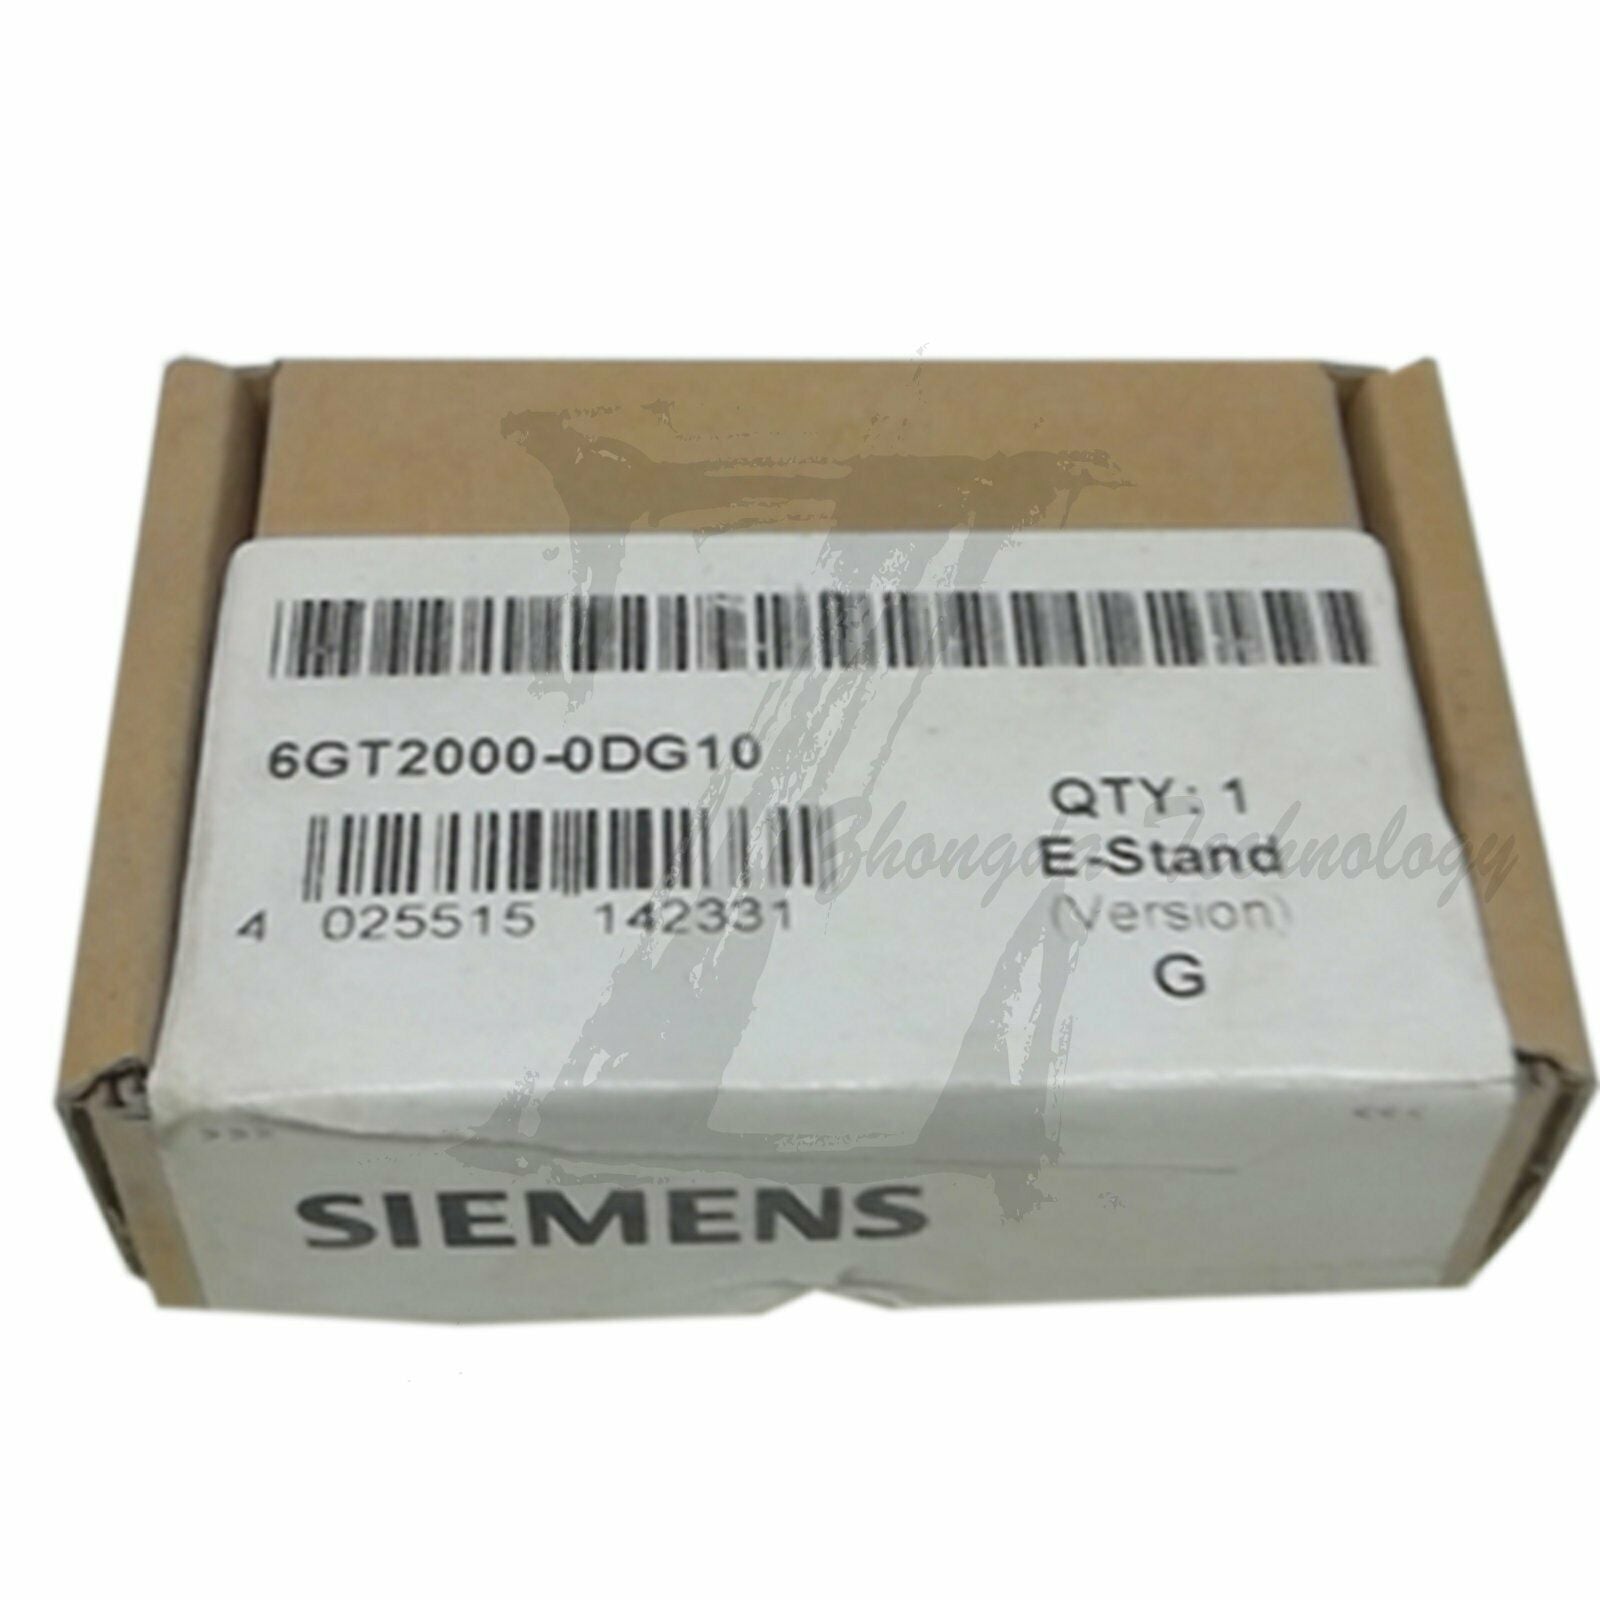 New Siemens data memory card 6GT2000-0DG10